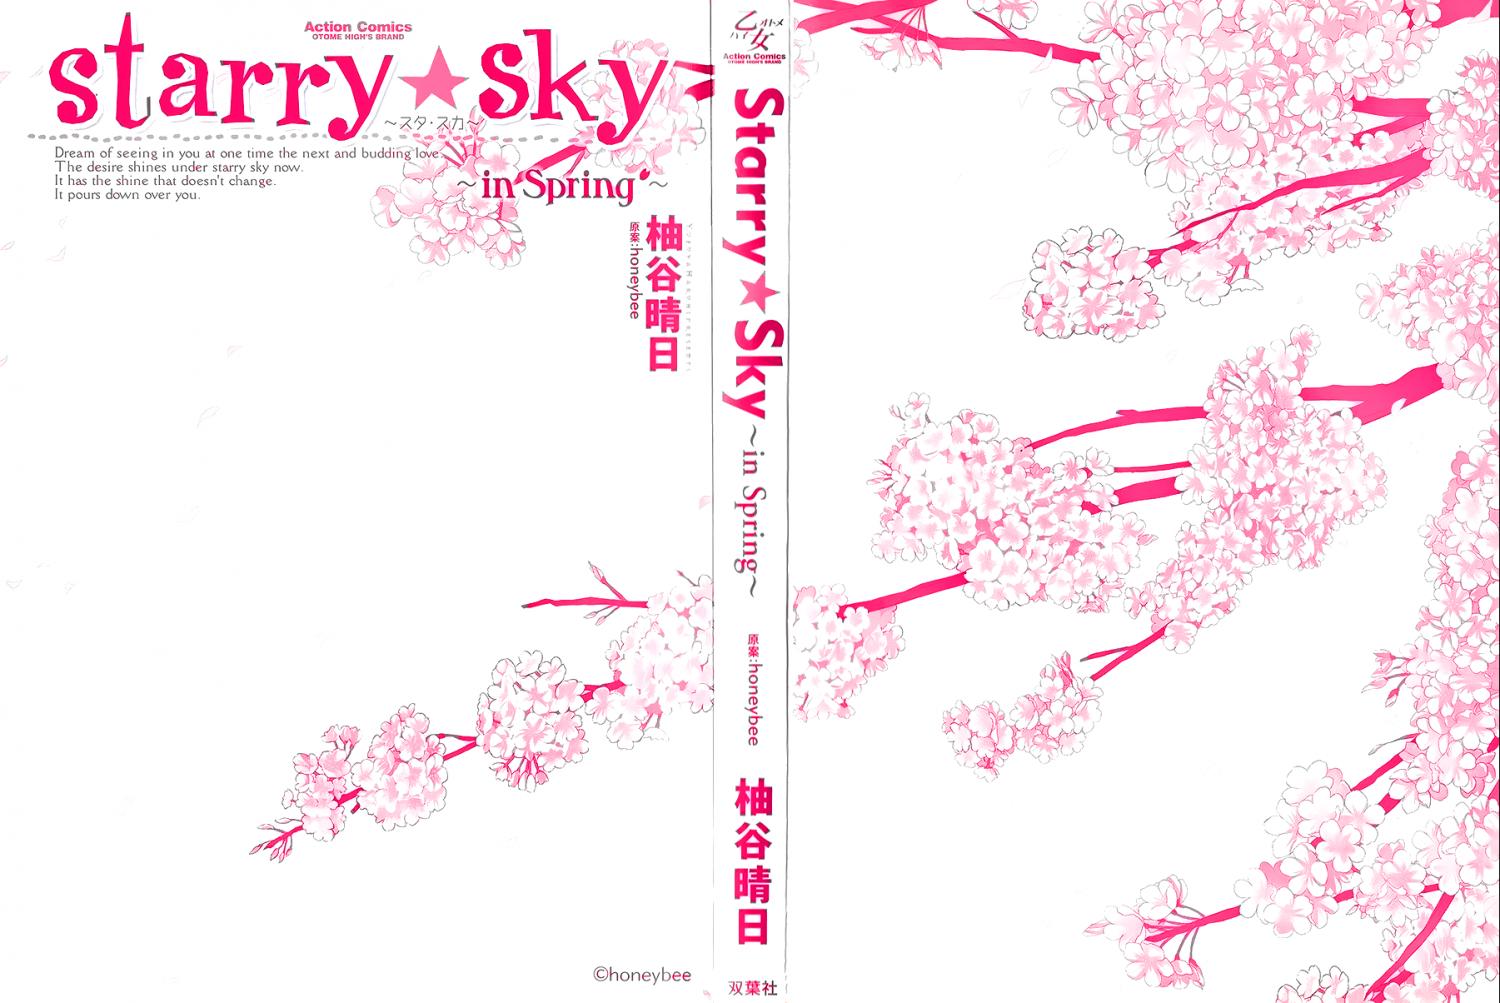 StarryâSky ~in Spring - episode 15 - 4